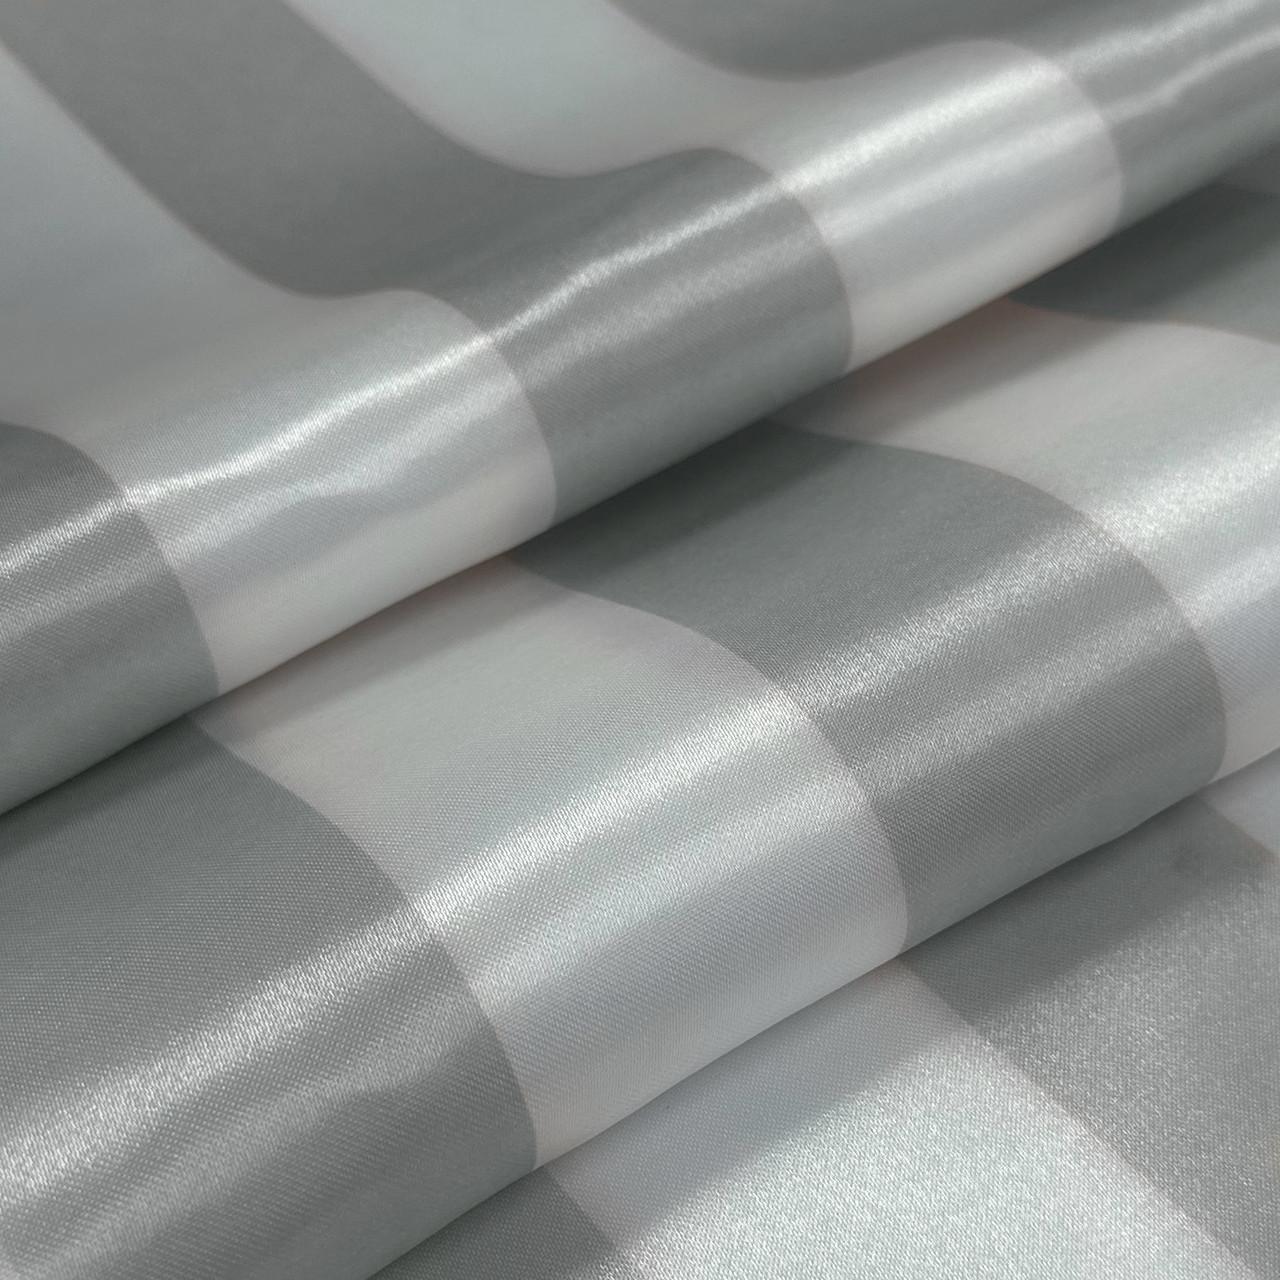 5 Pack Silver Striped Satin Linen Napkins, Wrinkle-Free Reusable